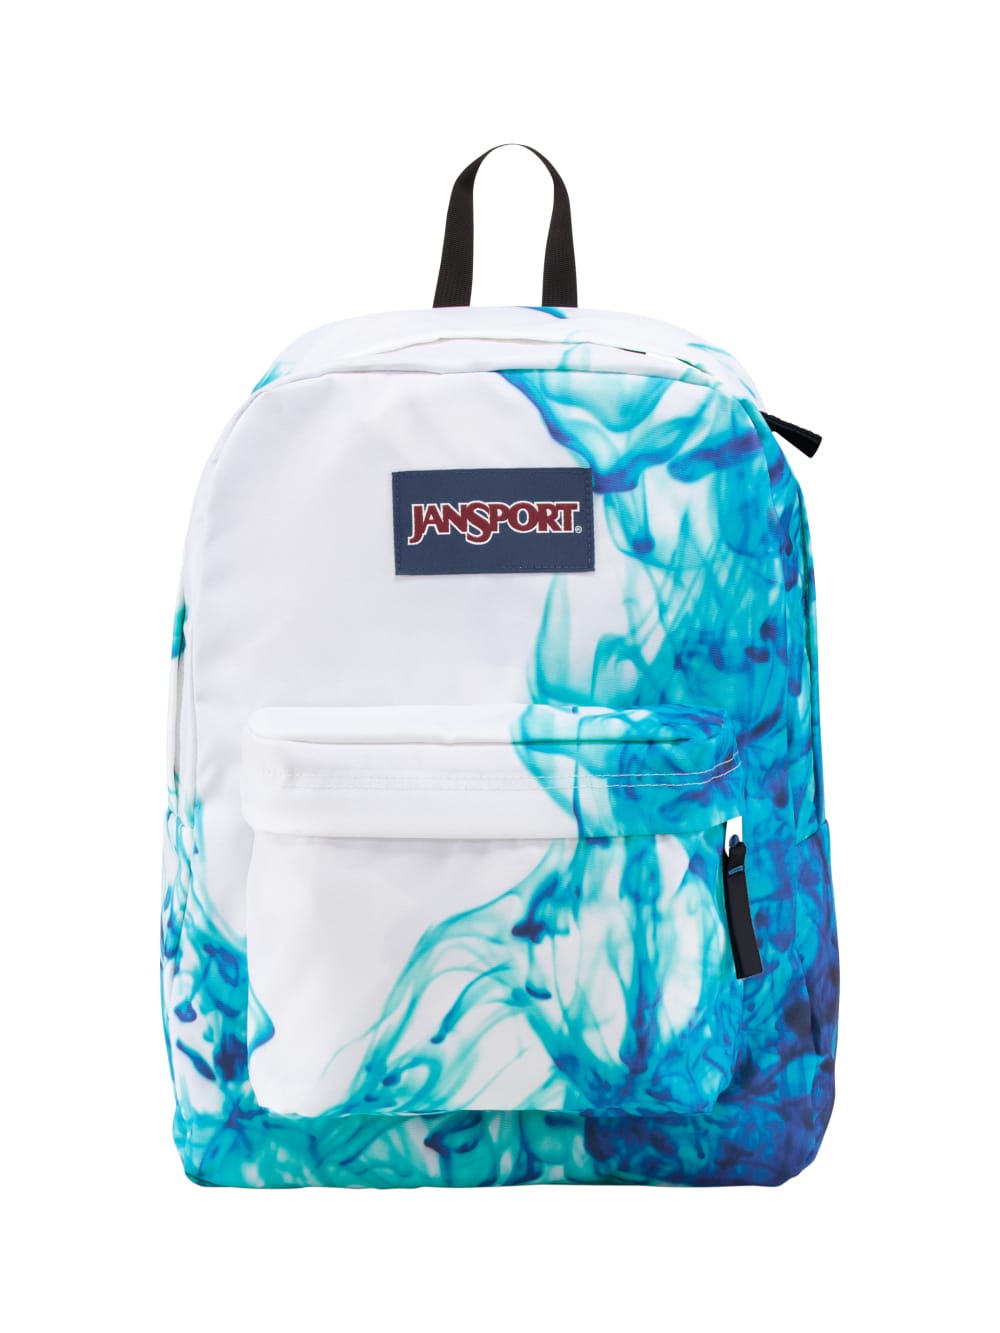 shark jansport backpack